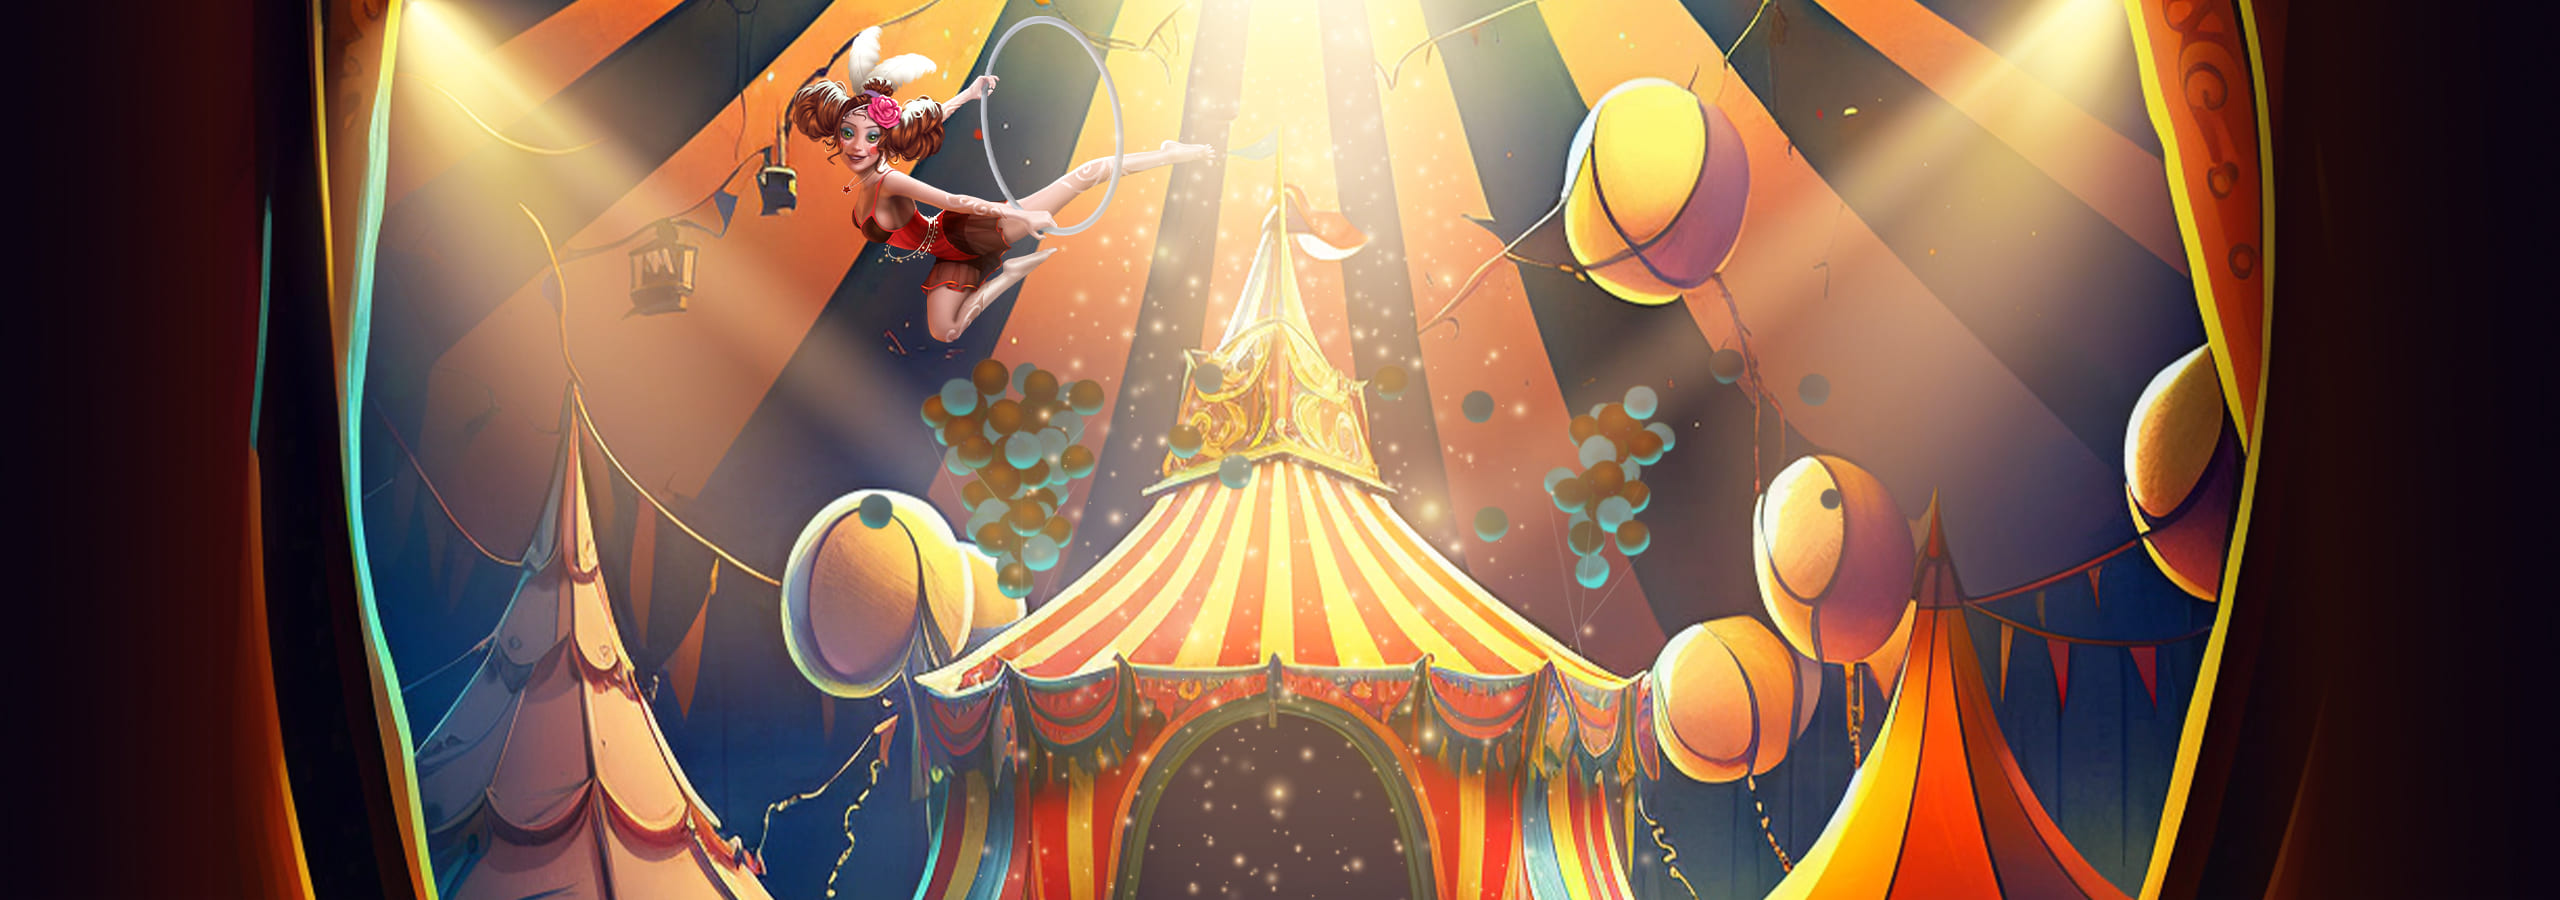 Amazing Circus's background